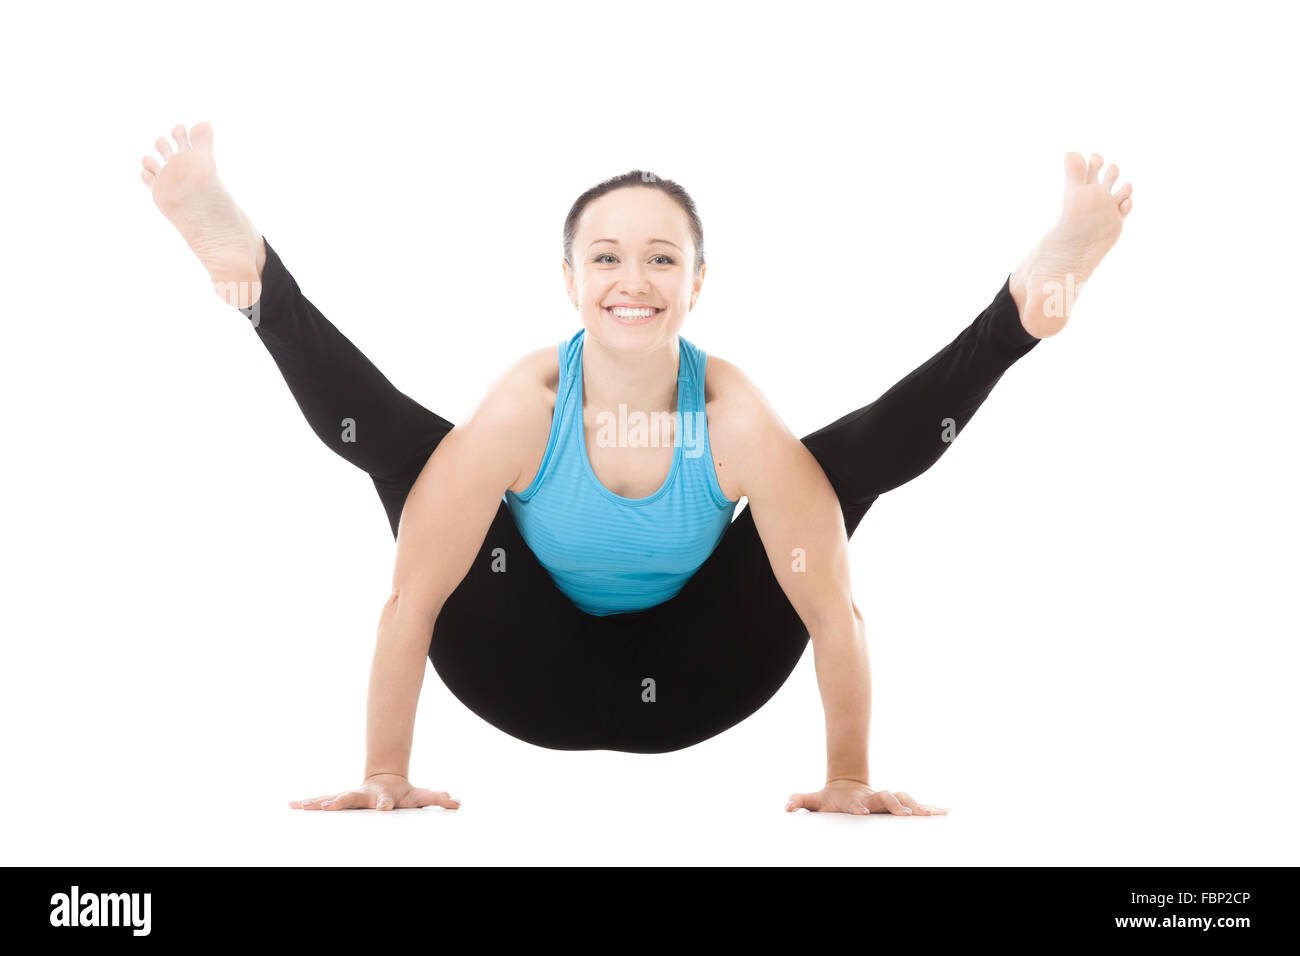 Yogui deportivo sonriente chica haciendo ejercicios físicos, yoga asana Tittibhasana, brazo equilibrio postura Firefly, insecto plantean, aislado Foto de stock